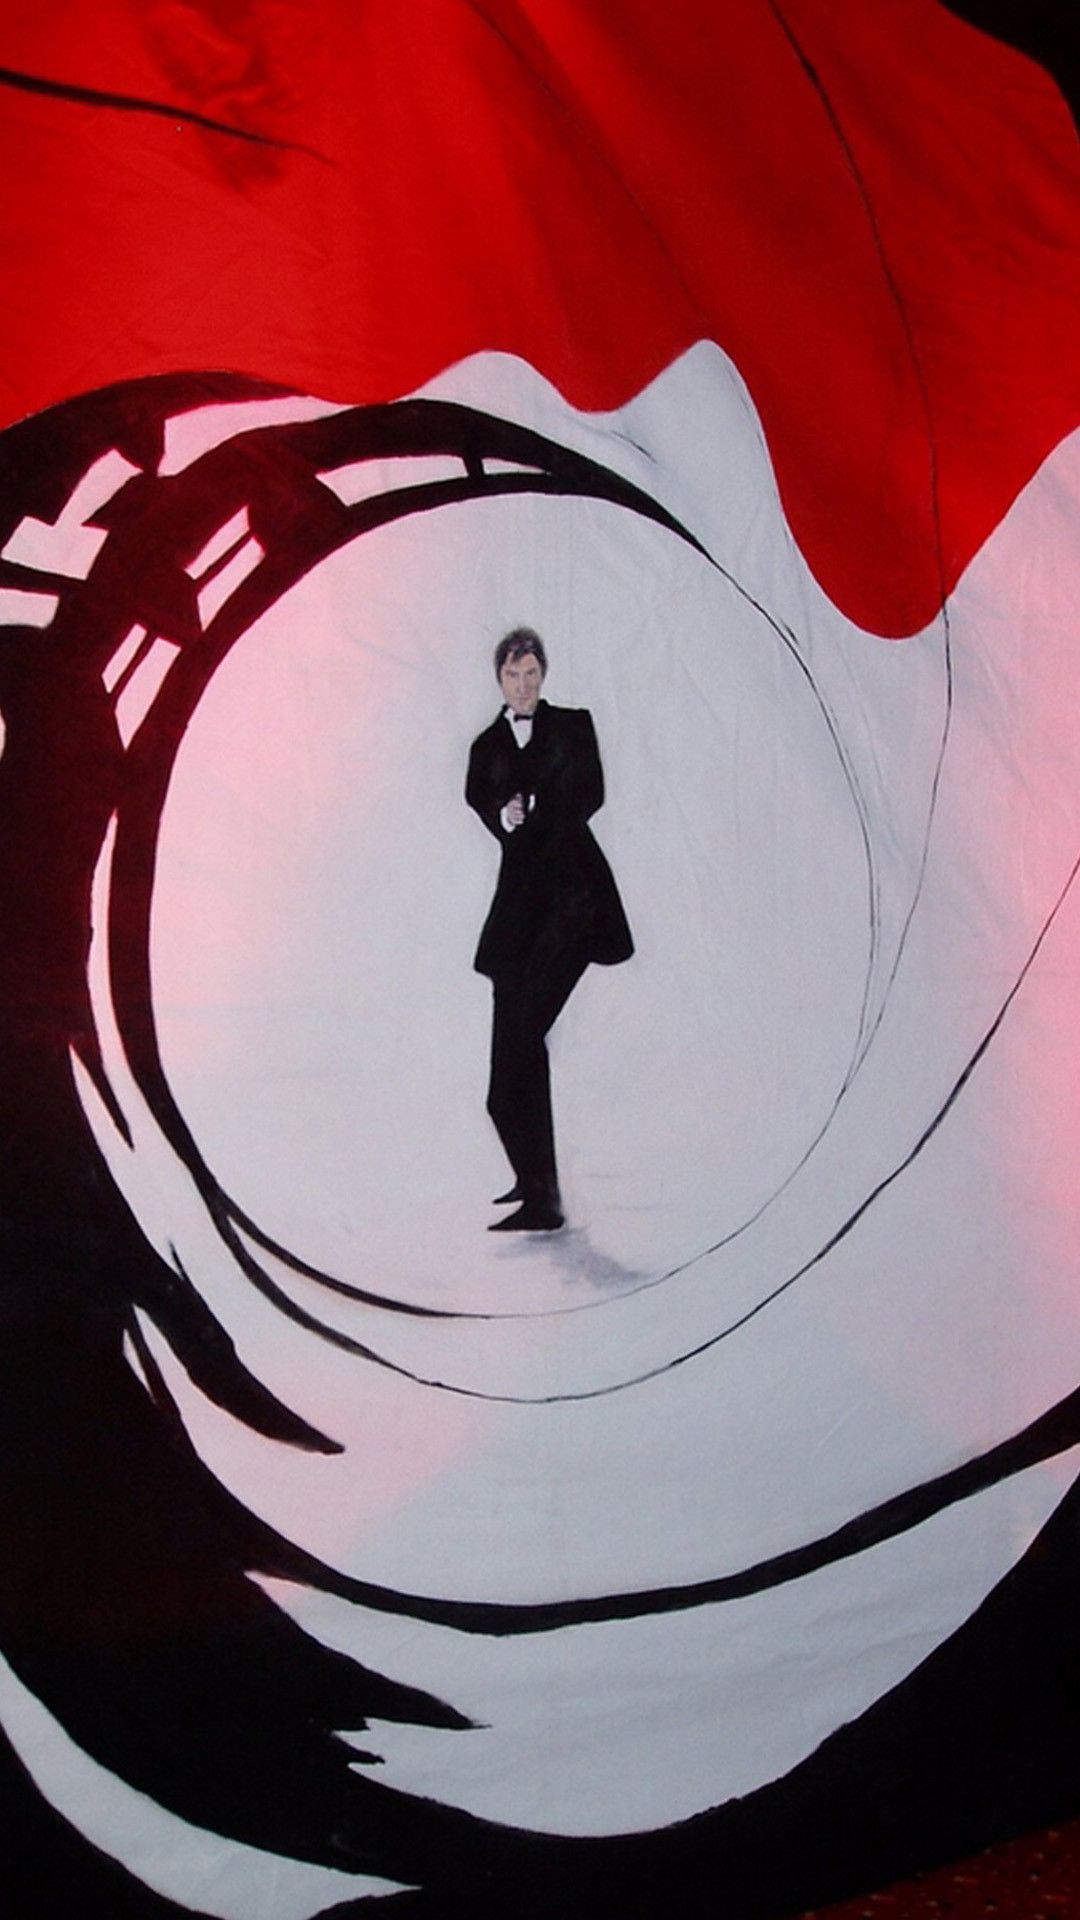 James Bond Art Wallpapers